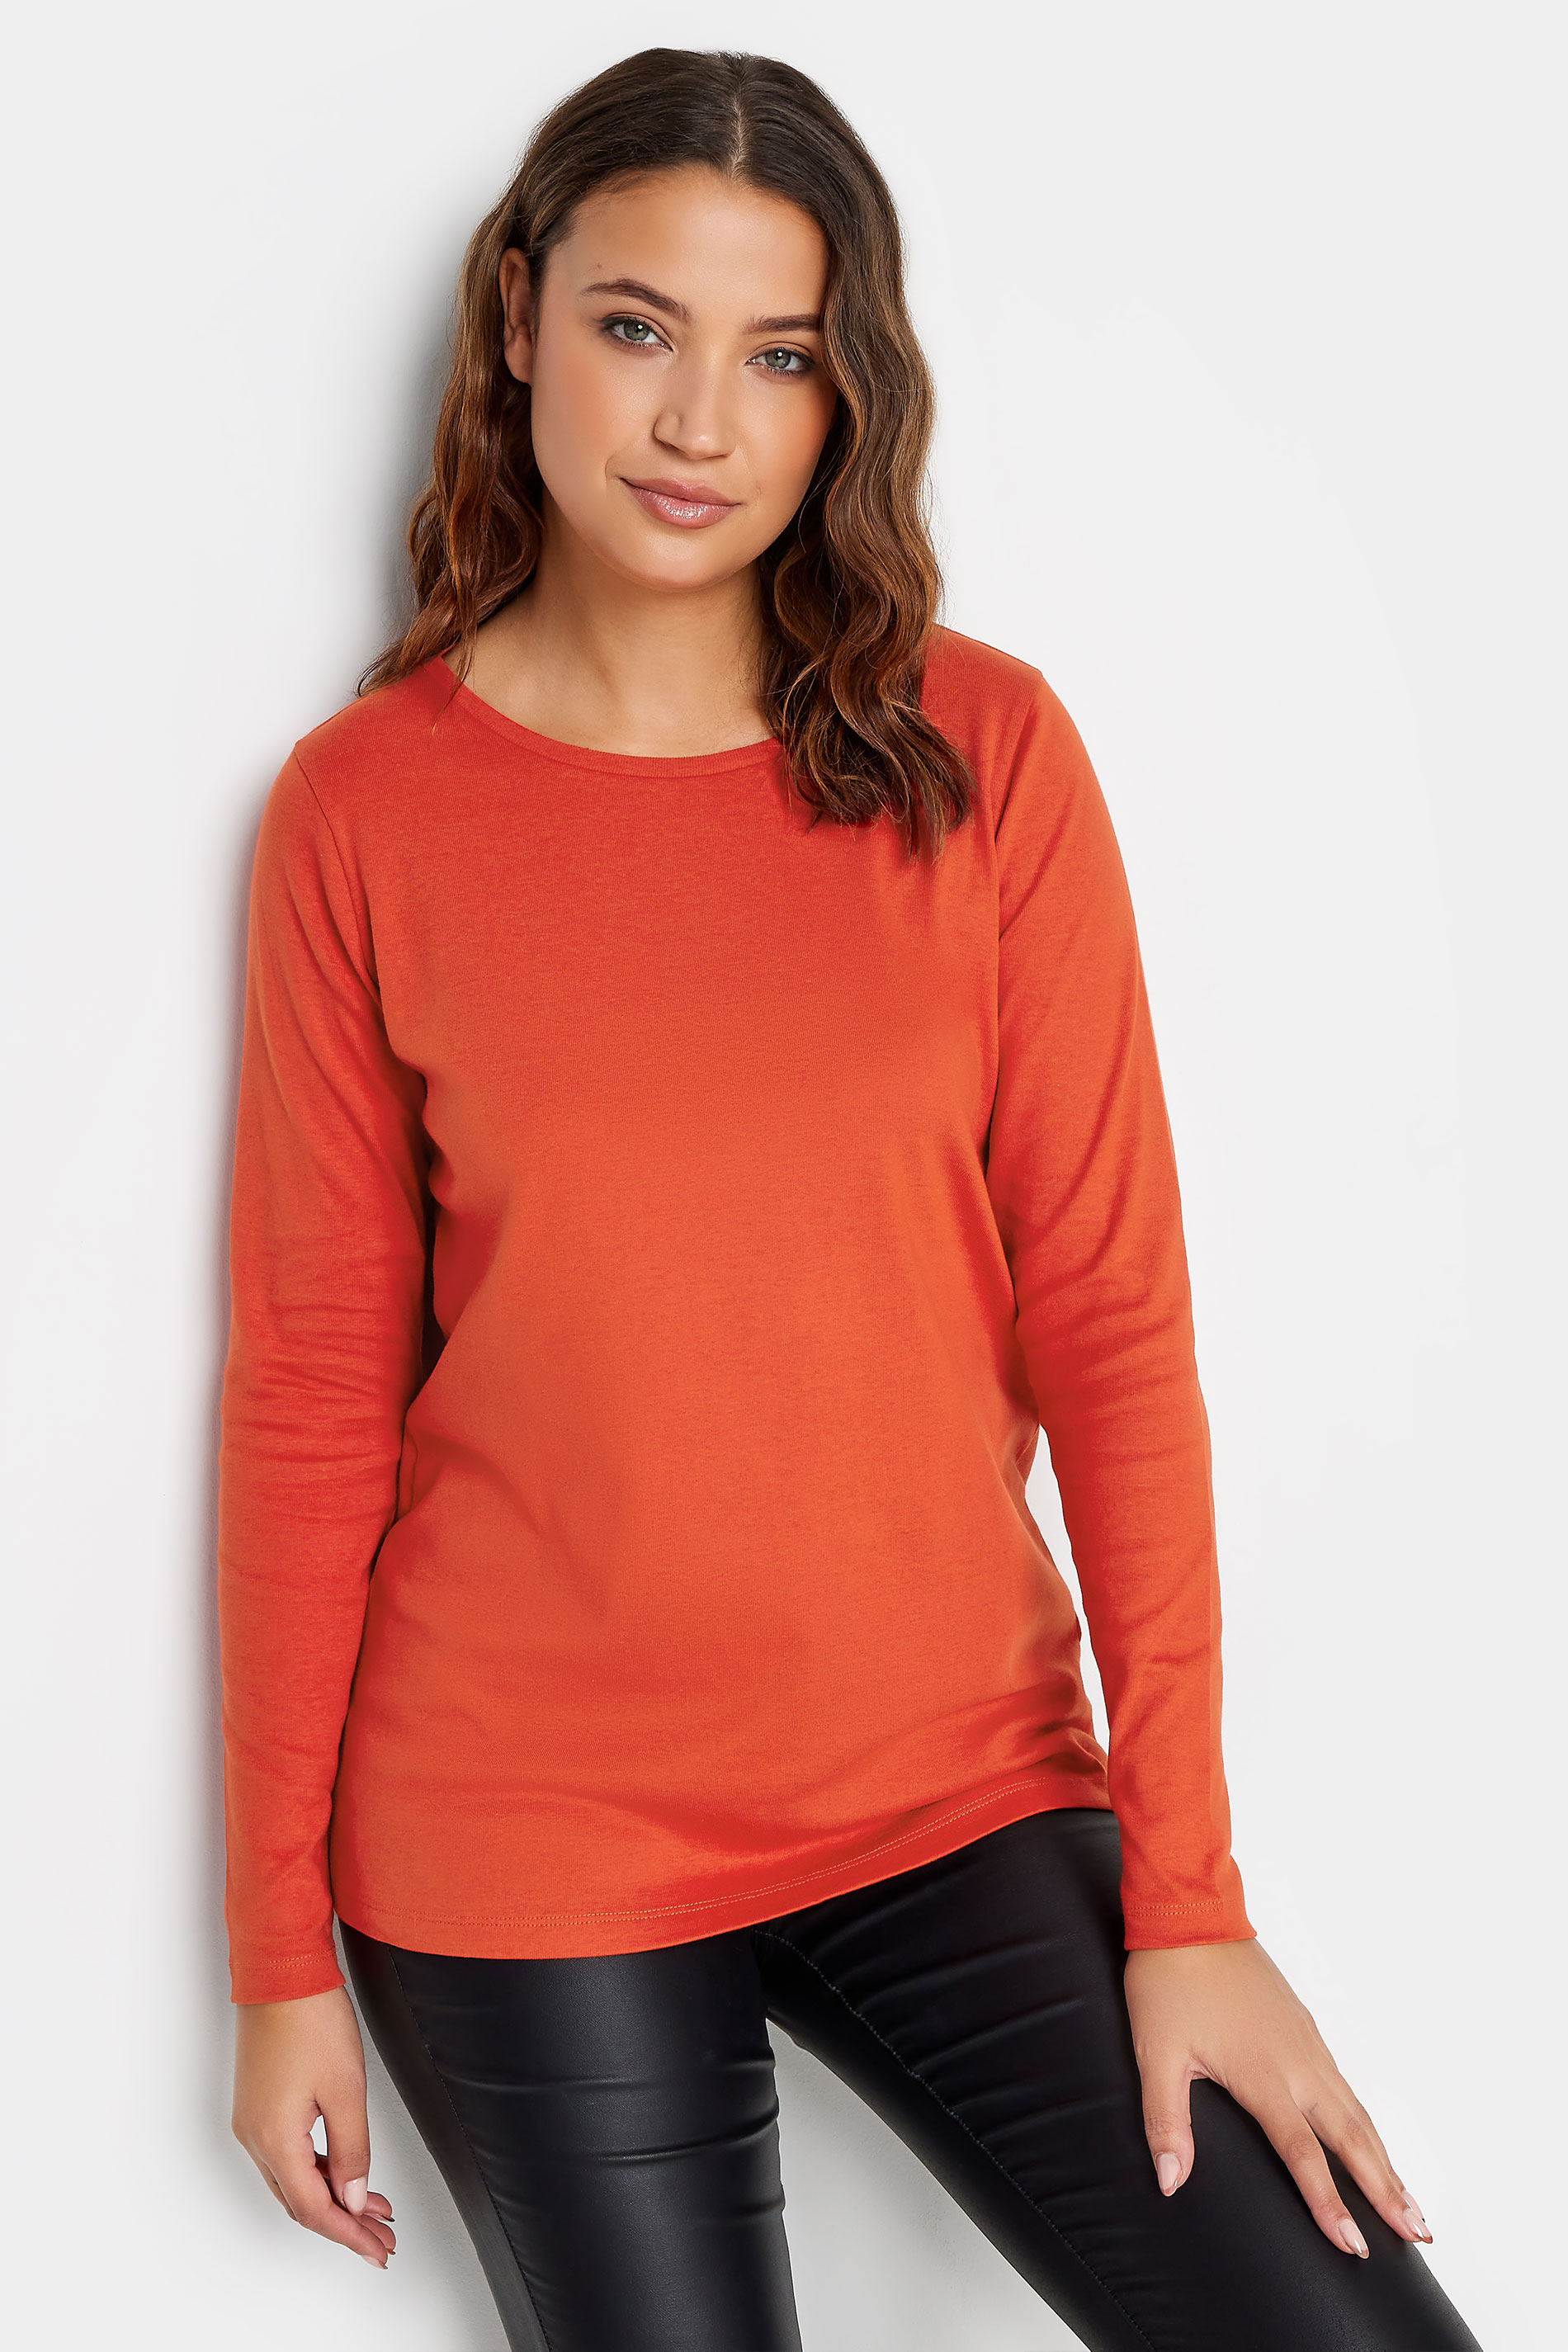 LTS Tall Bright Red Long Sleeve Cotton T-Shirt | Long Tall Sally  1